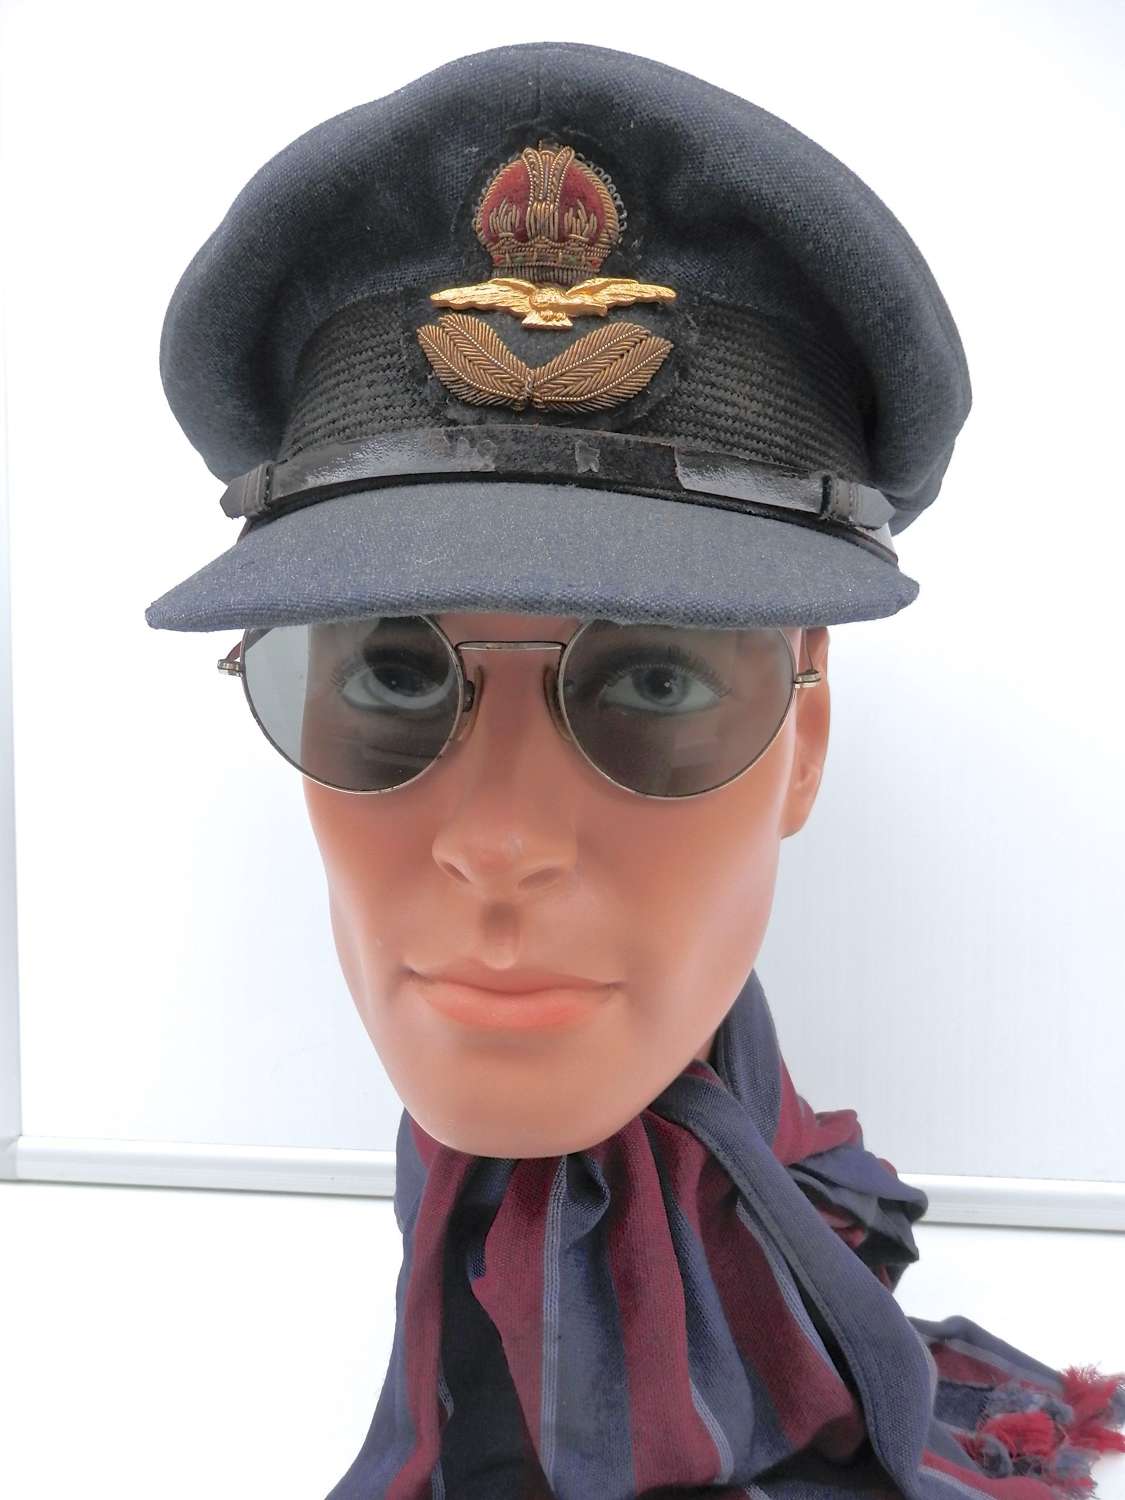 RAF early type officer peaked cap